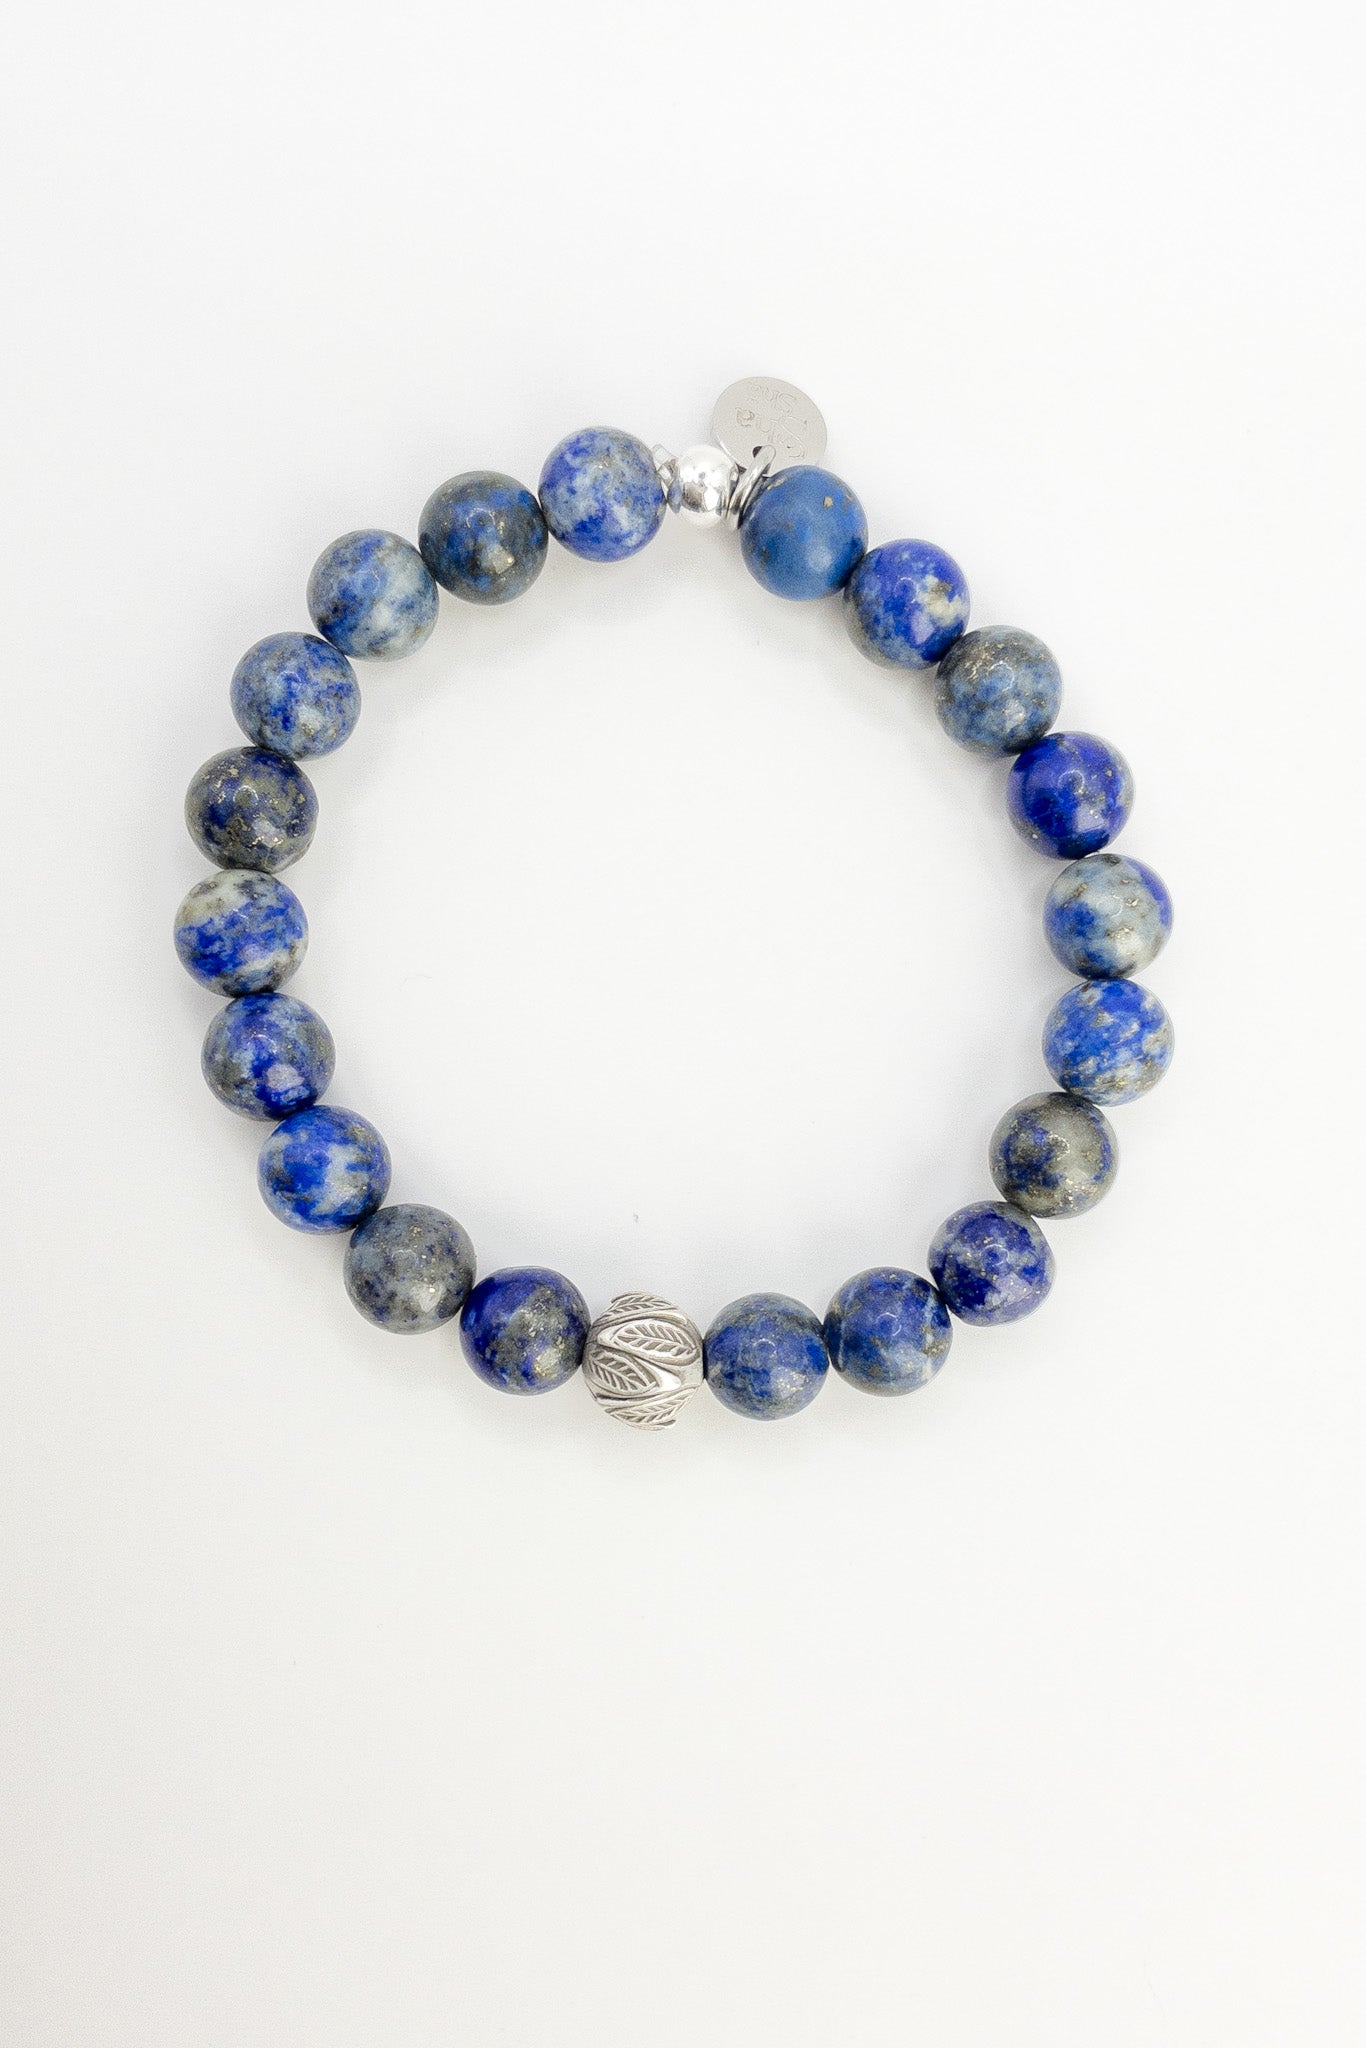 Lapis Lazuli and 925 sterling silver Leaf Bracelet - ShaSha Healing stones jewellery